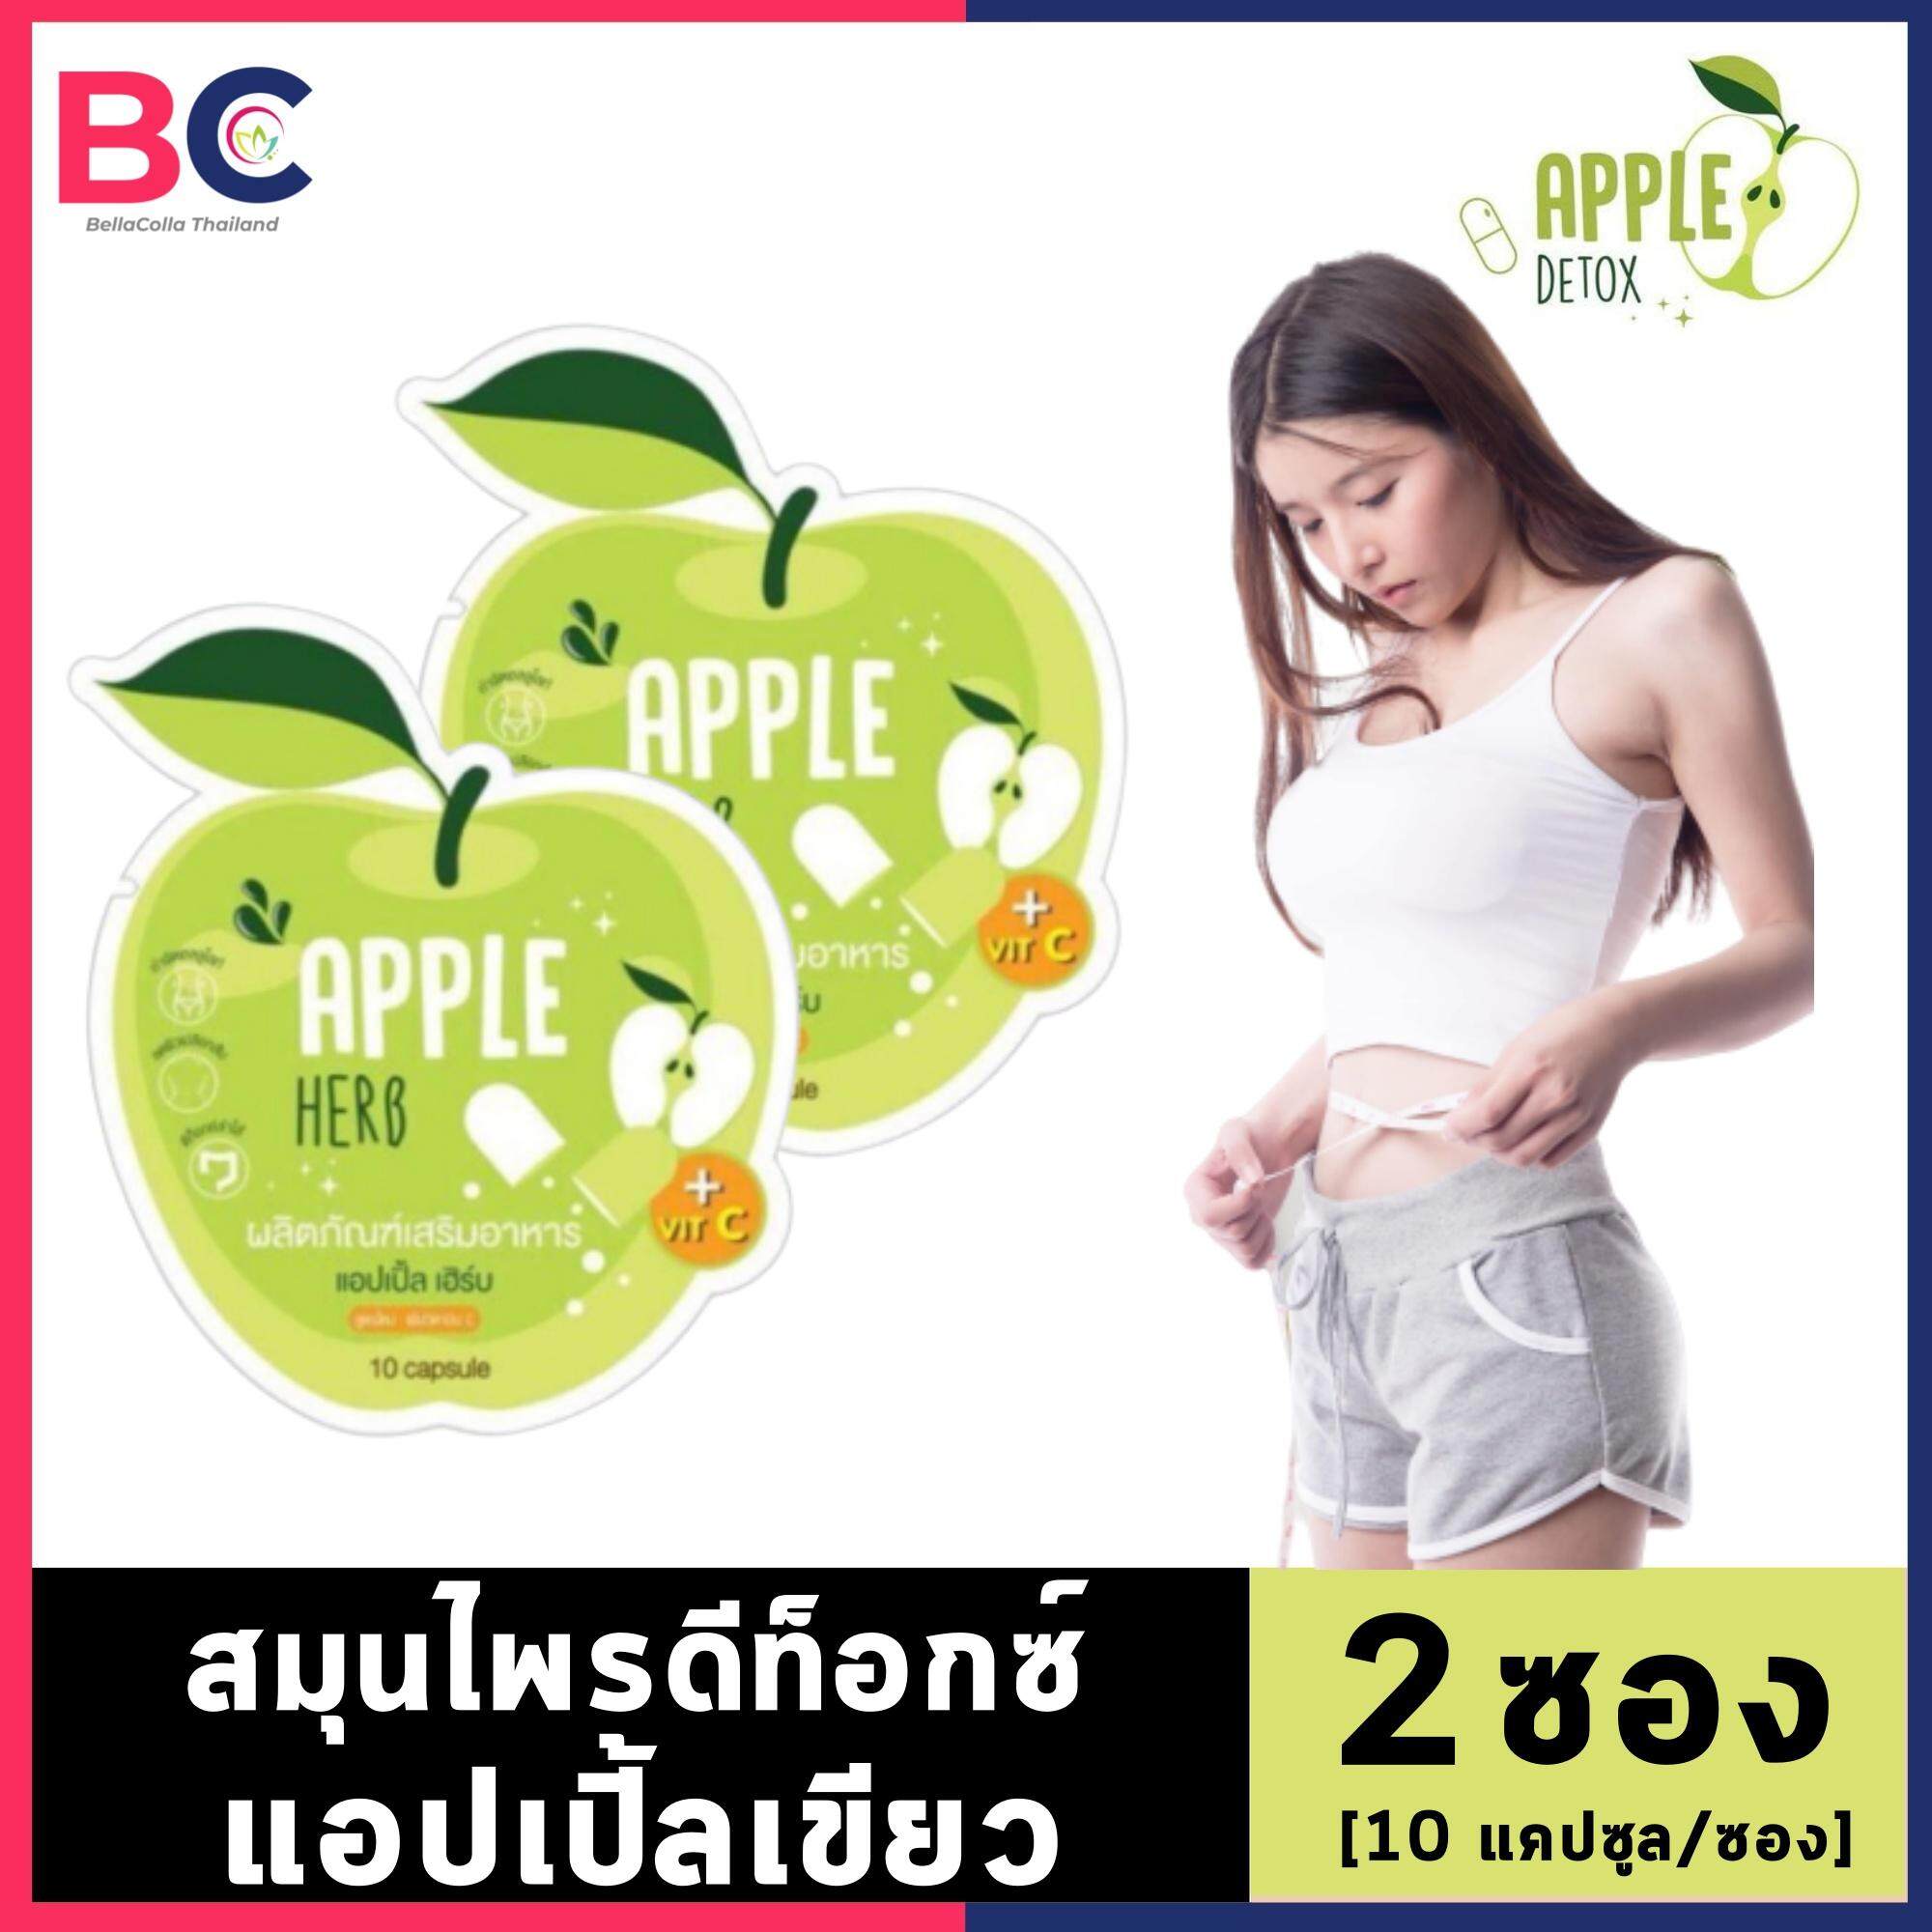 Apple Herb Detox [2 ซอง] สมุนไพรแอปเปิ้ลเขียวดีท็อกซ์ ลดน้ำหนัก ดีท็อกซ์ลดพุง ดีท็อกลำไส้ ดีท็อค by BellaColla Thailand